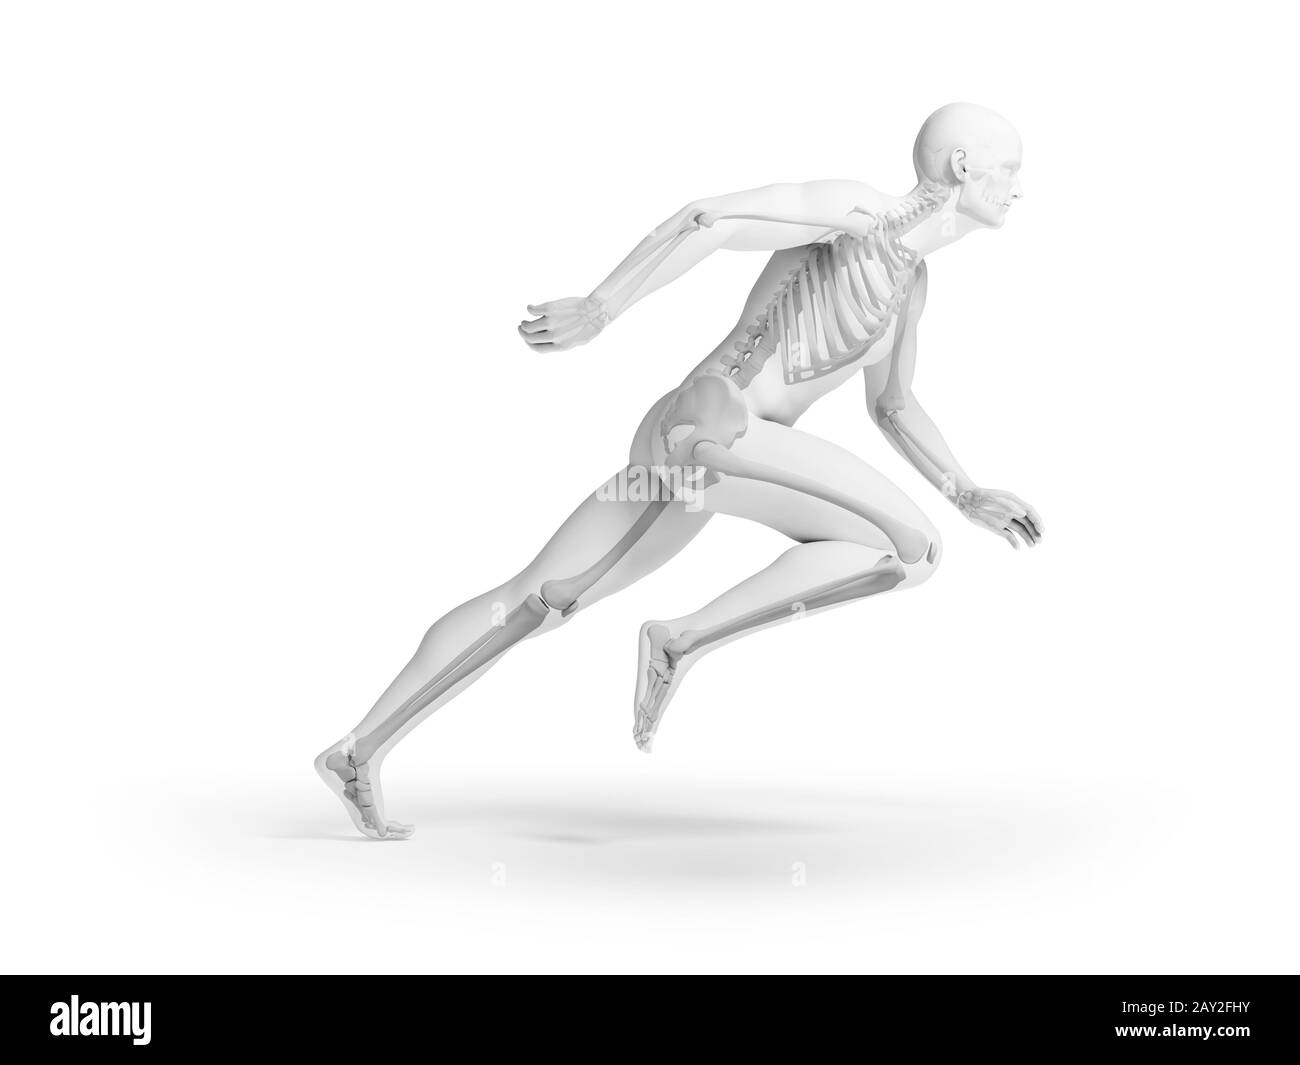 3d rendered illustration - sprinter Stock Photo